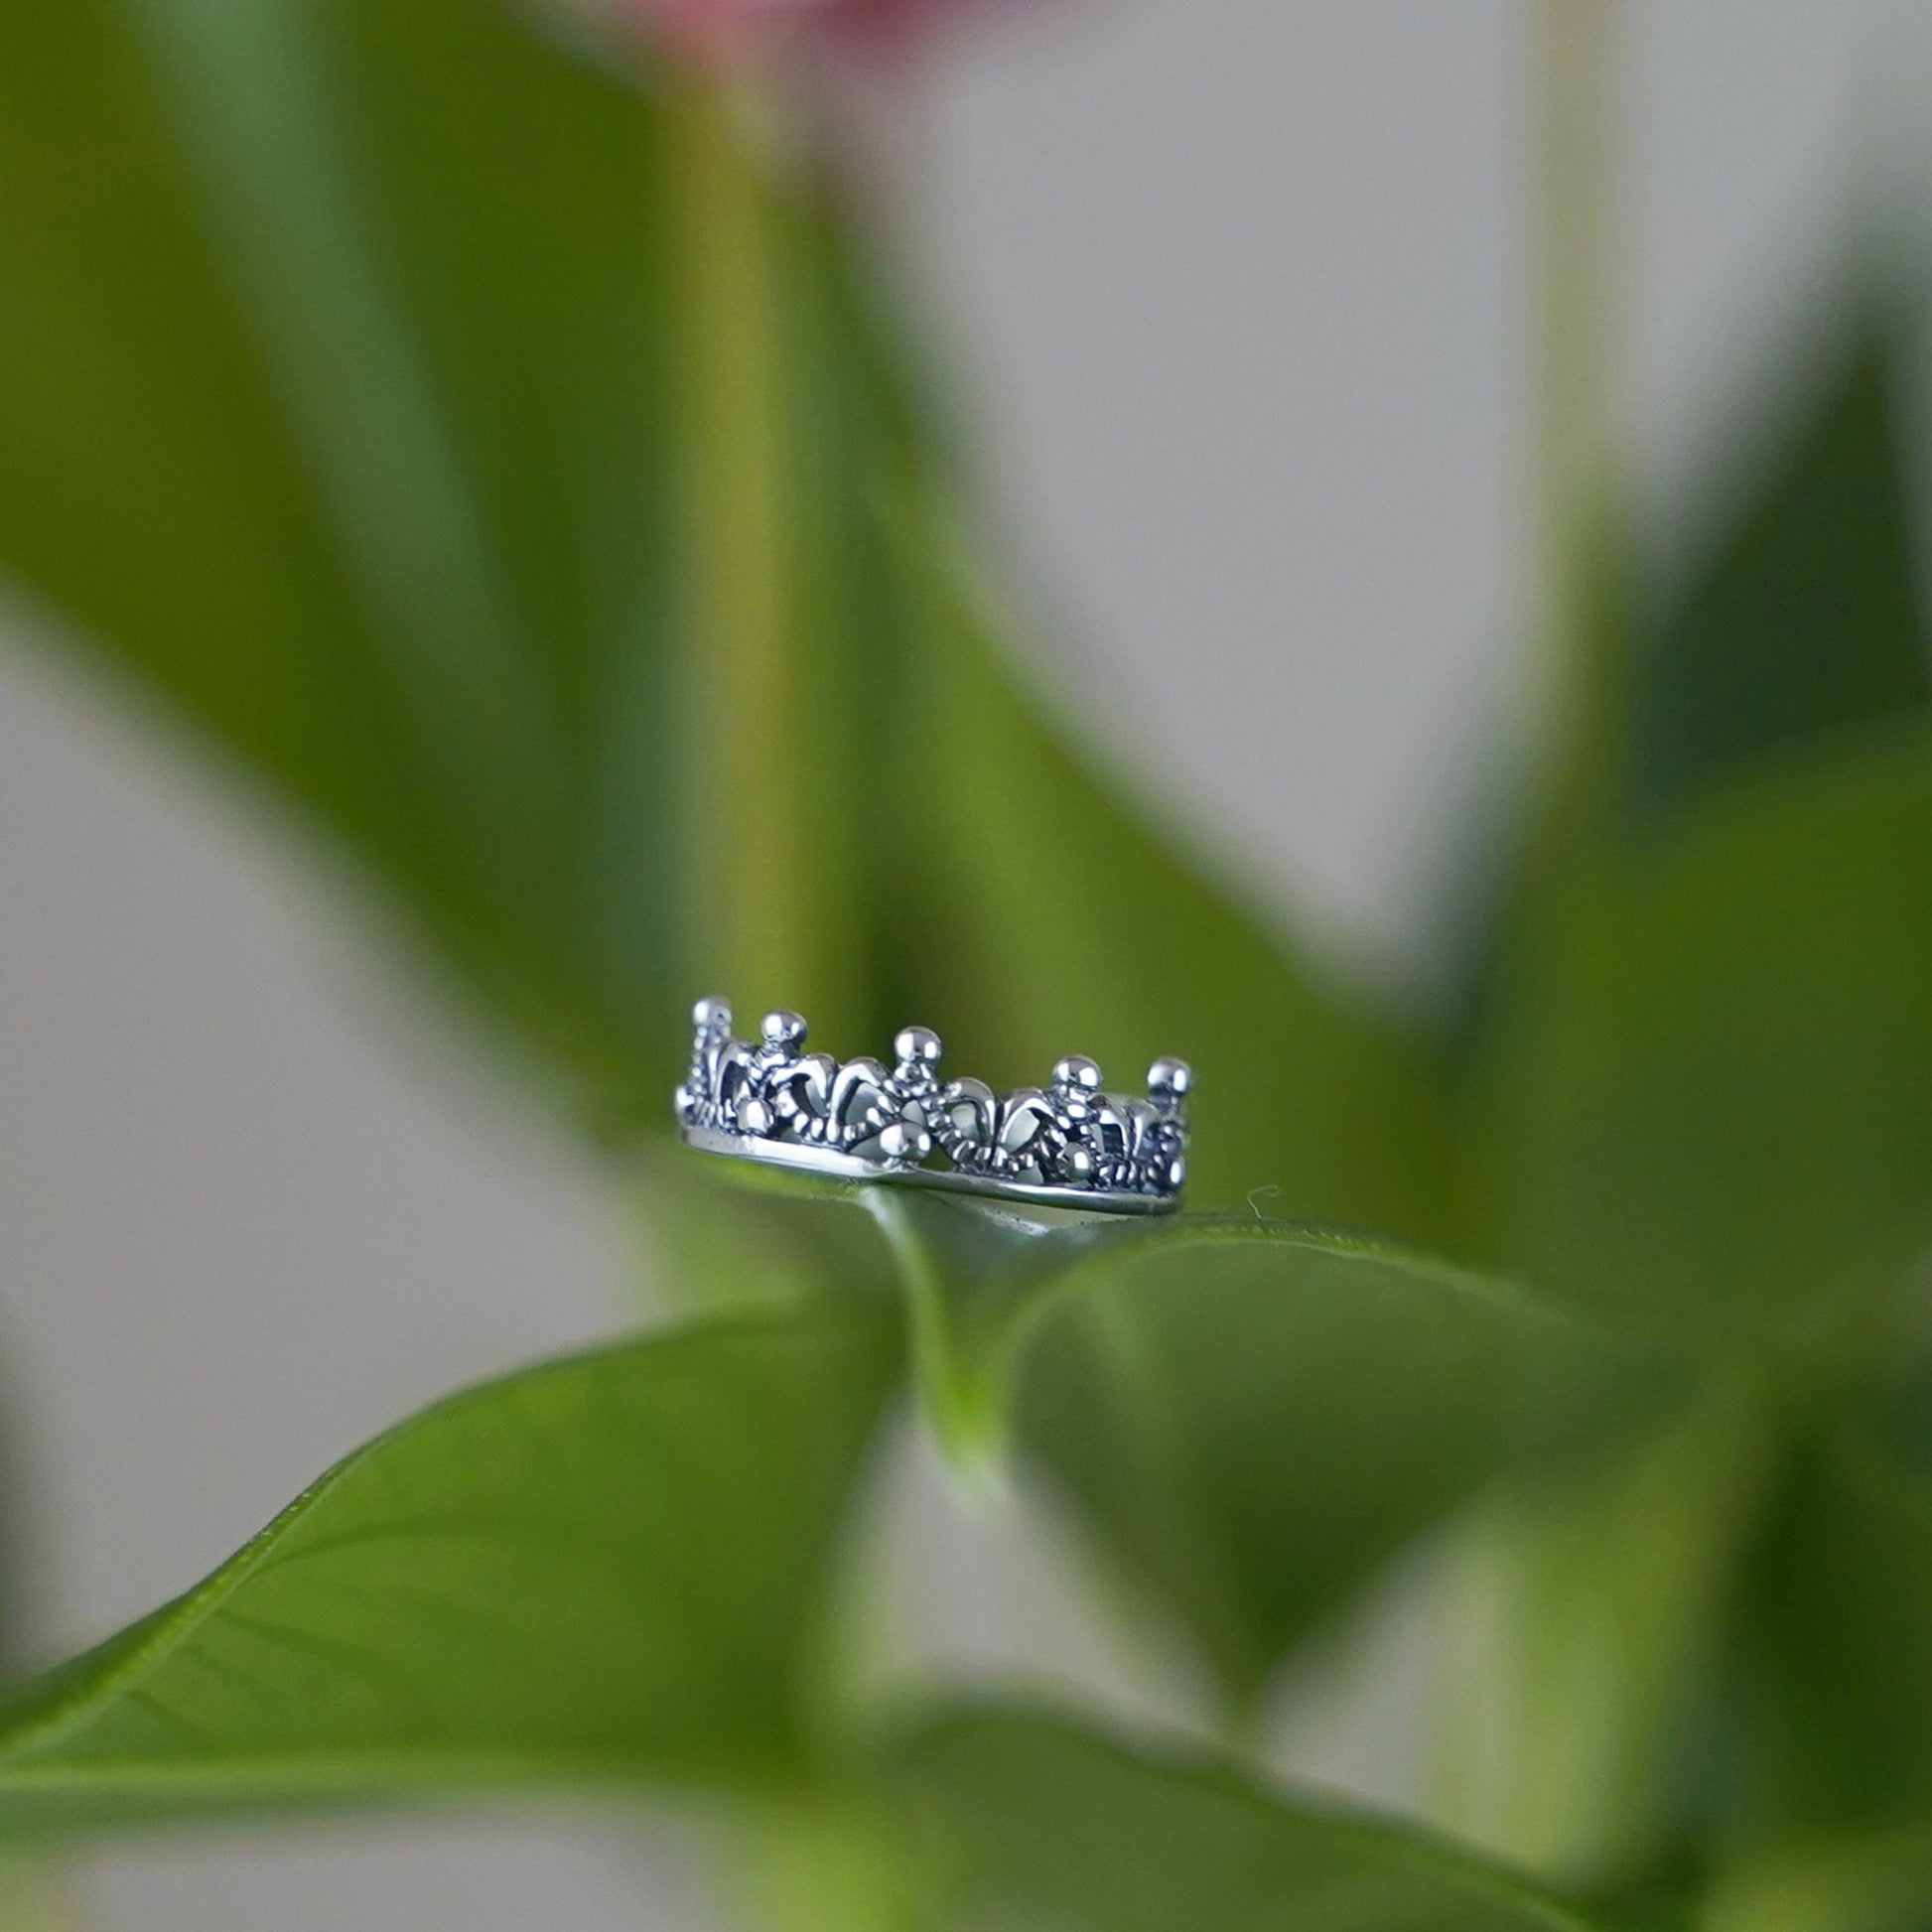 Sterling Silver Oxidized Royal Tiara Coronation Crown Toe Ring Pinky Ring - sugarkittenlondon